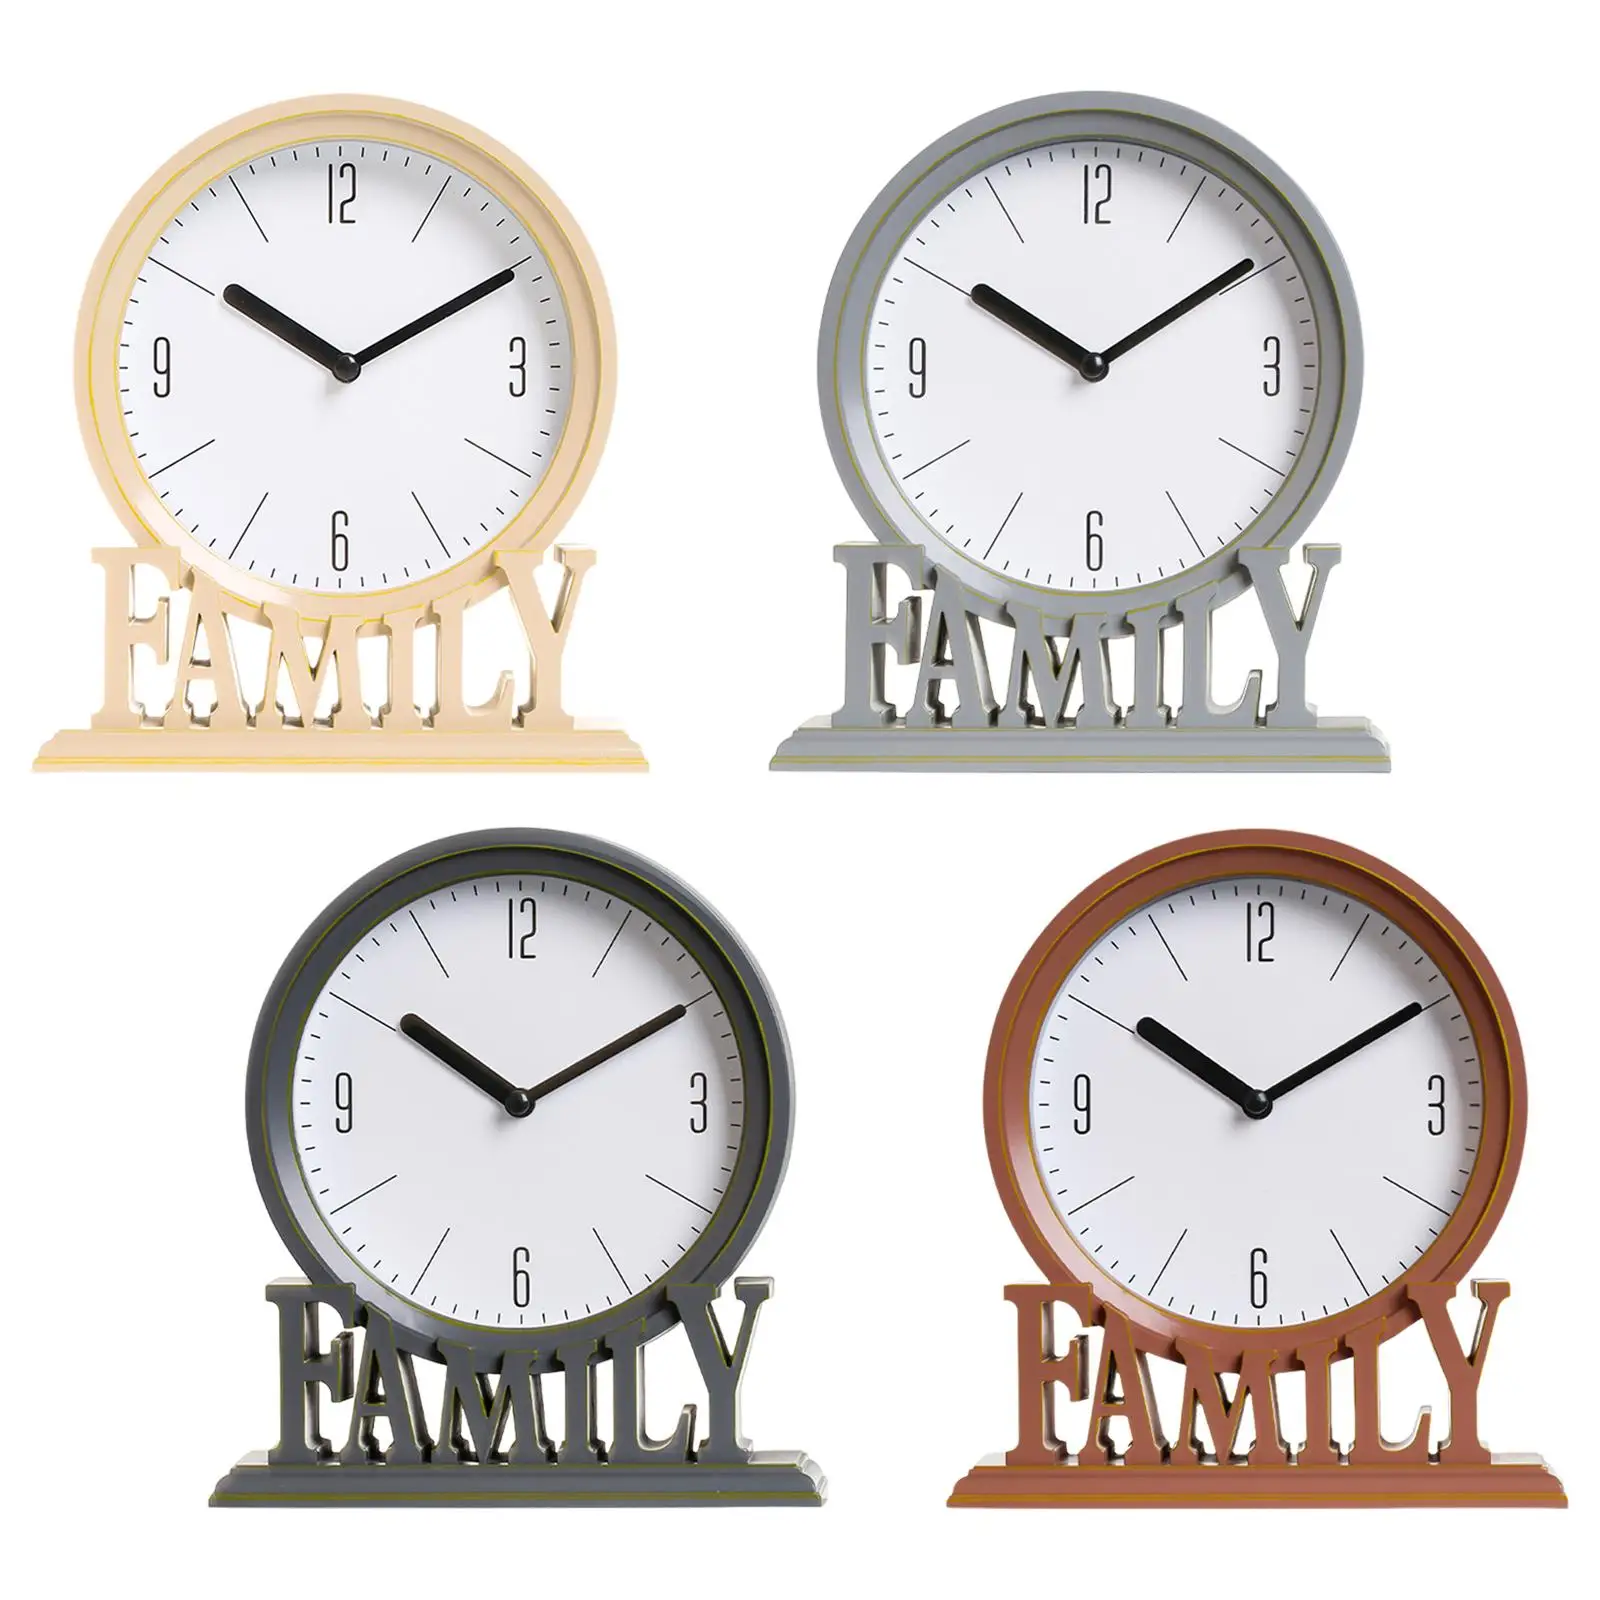 Table Clocks Family Decorative Non Ticking Mantel Clocks Silent Desk Clock for Farmhouse Bedroom Office Ornament Living Room